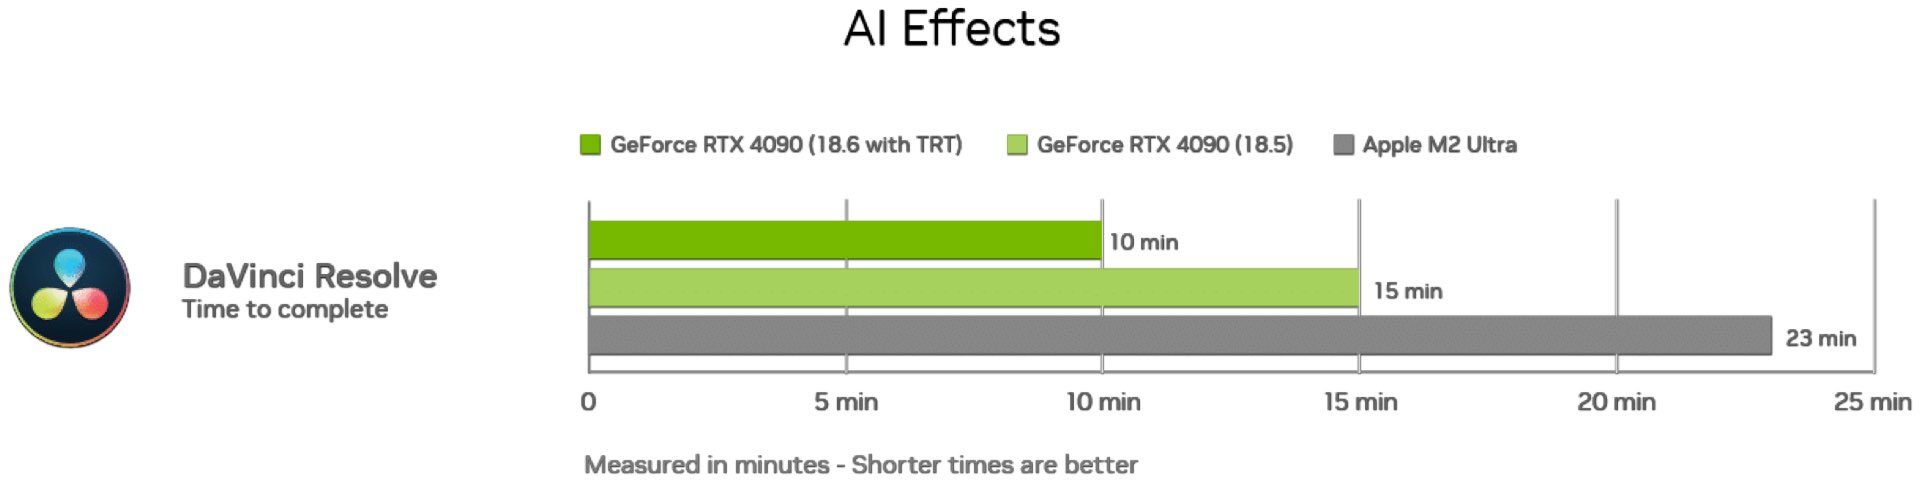 DaVinci Resolve 18.6: TensorRT Elevates AI Performance by 50% - Y.M ...